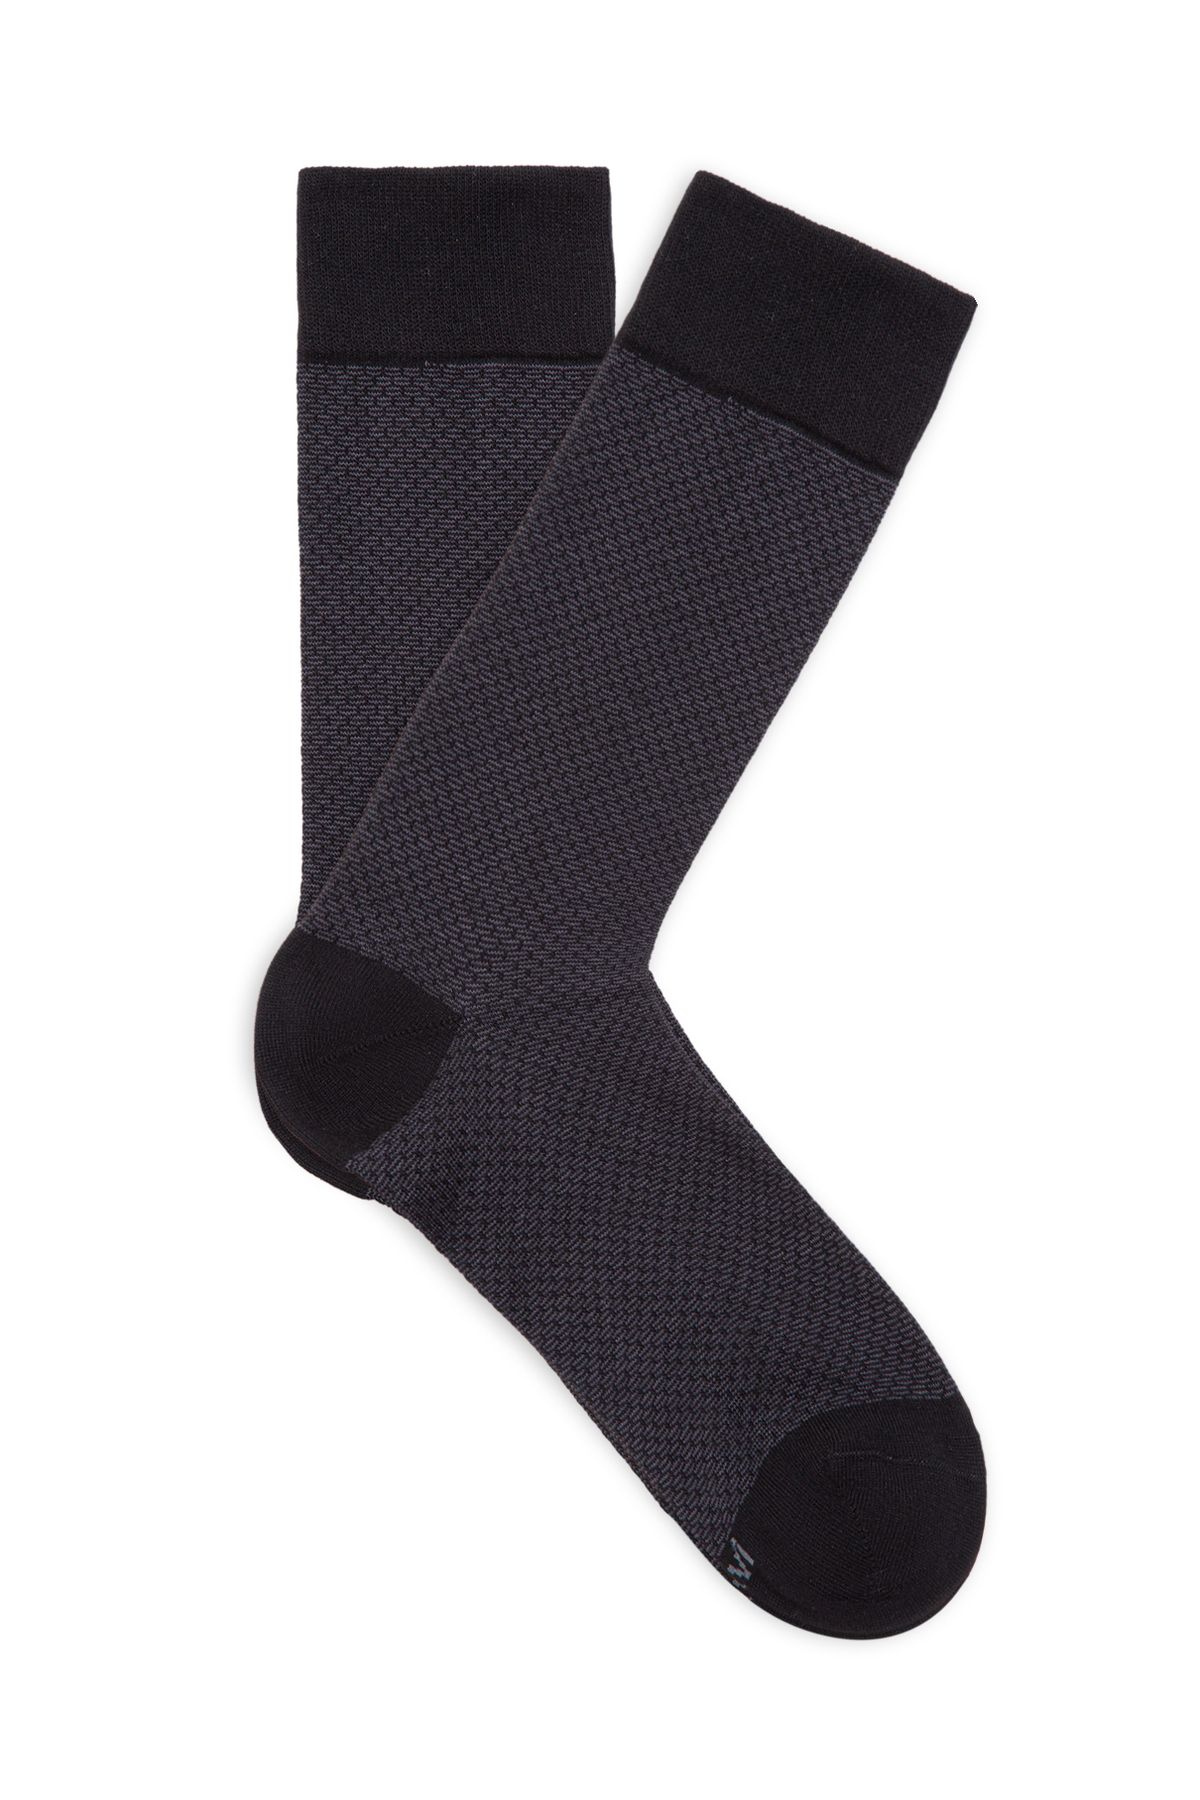 Mavi Siyah Soket Çorap 092030-900